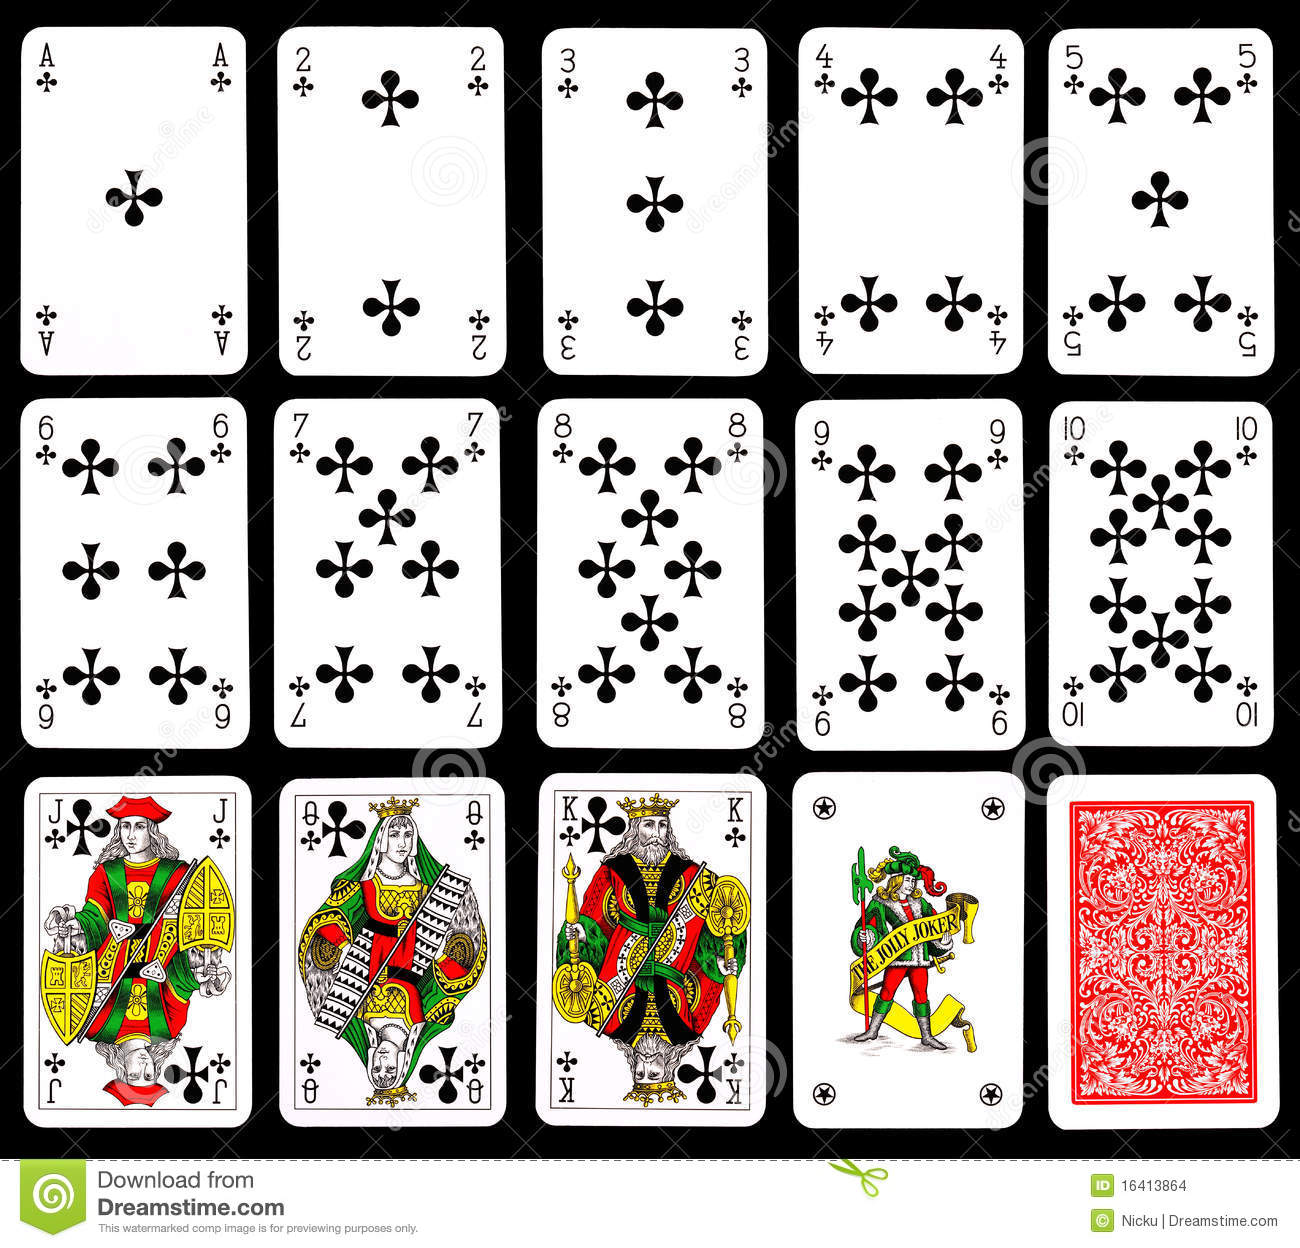 jolly card poker game